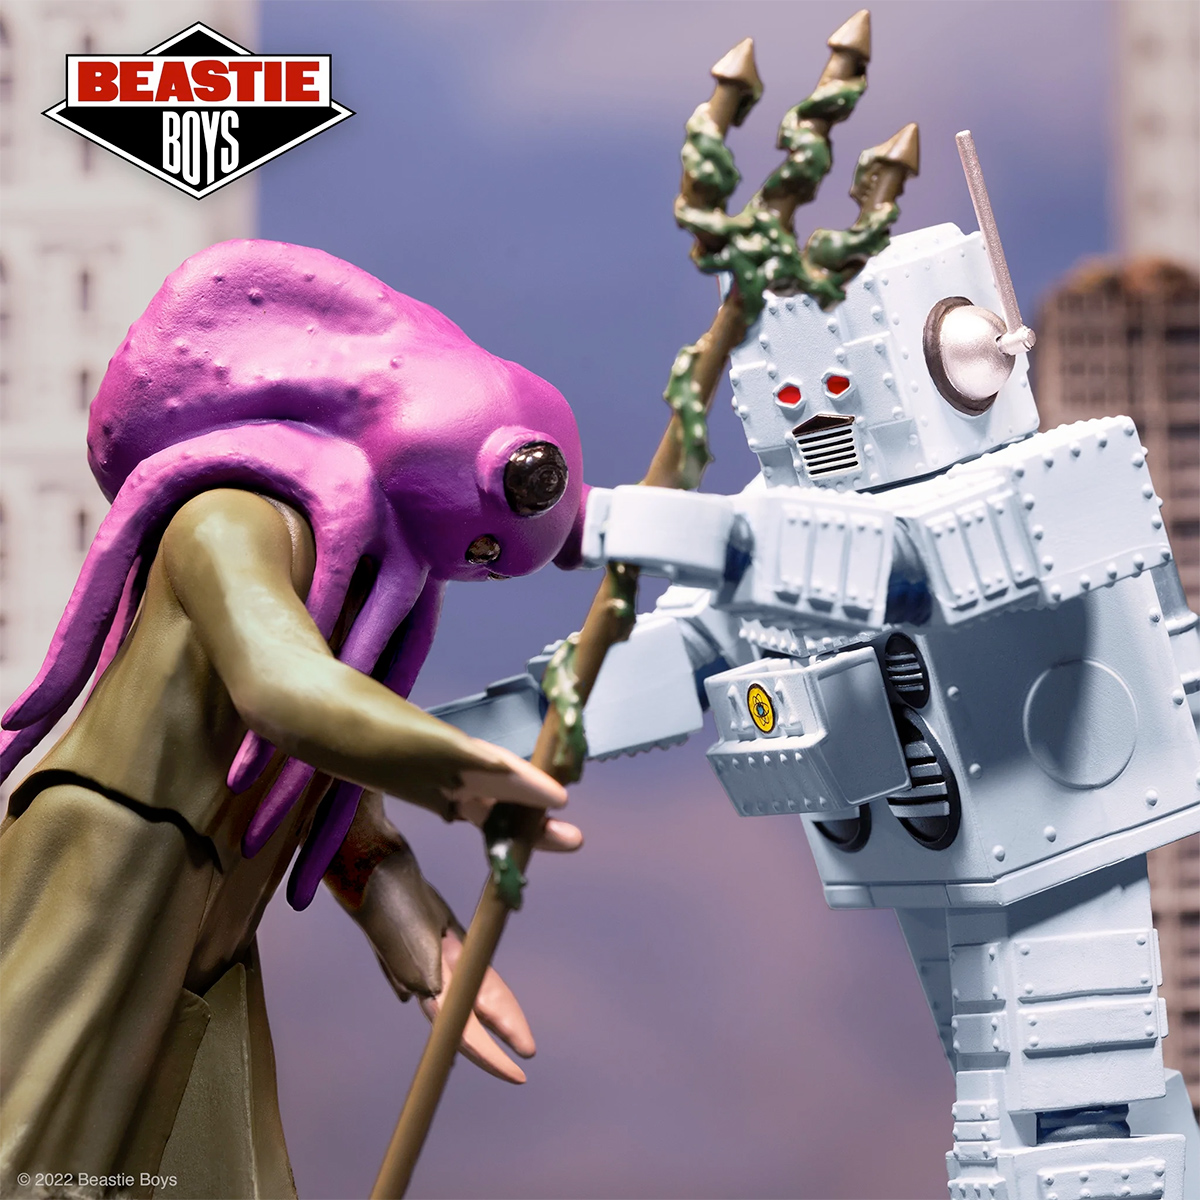 Beastie Boys “Intergalactic” ReAction Action Figures